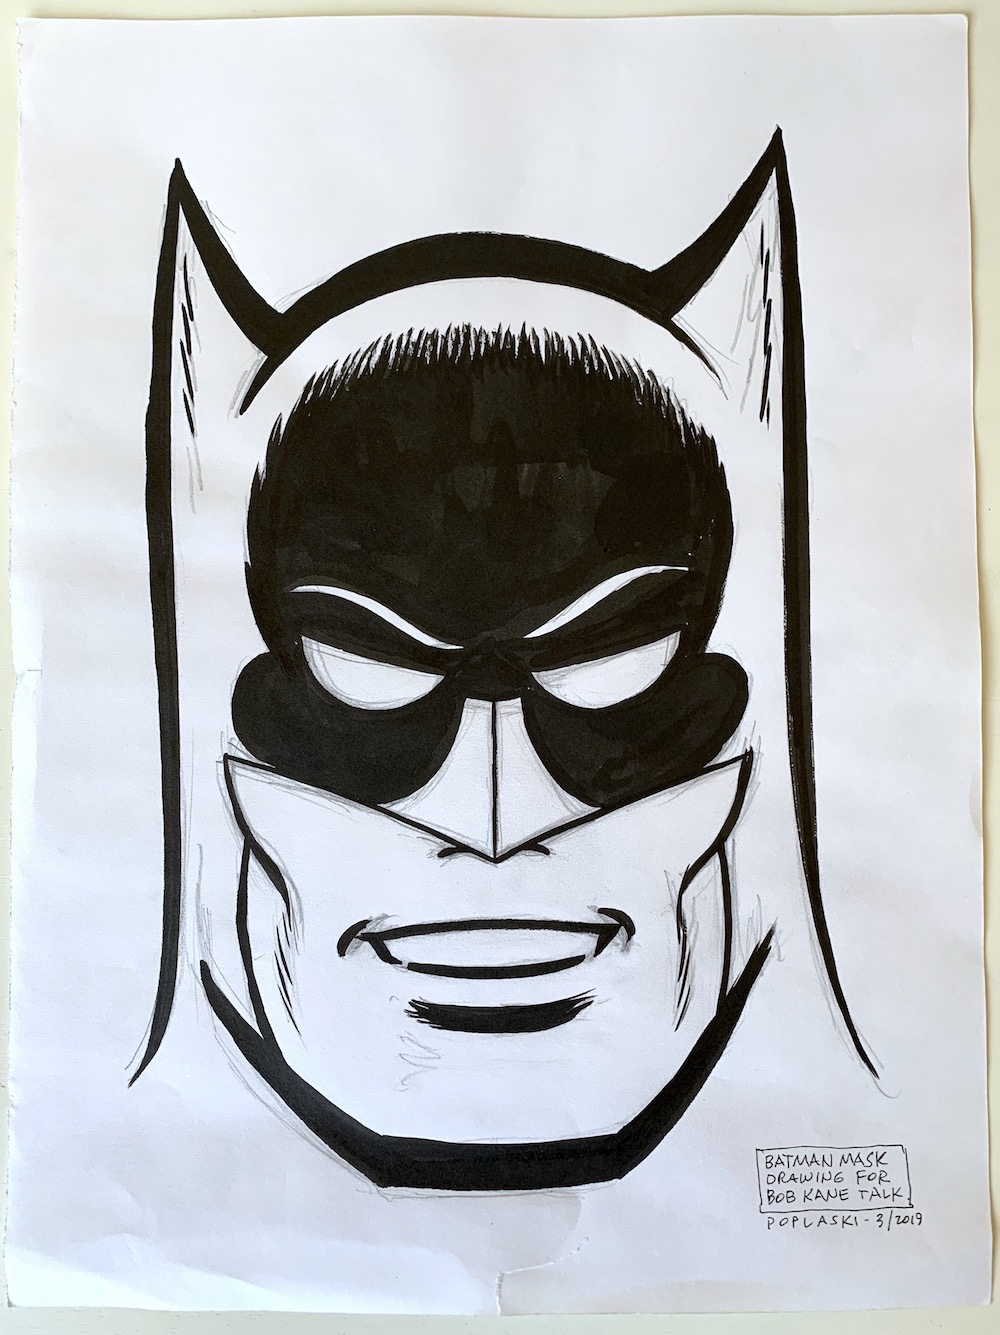 Peter Poplaski Art: BATMAN MASK preliminary drawing (2019)